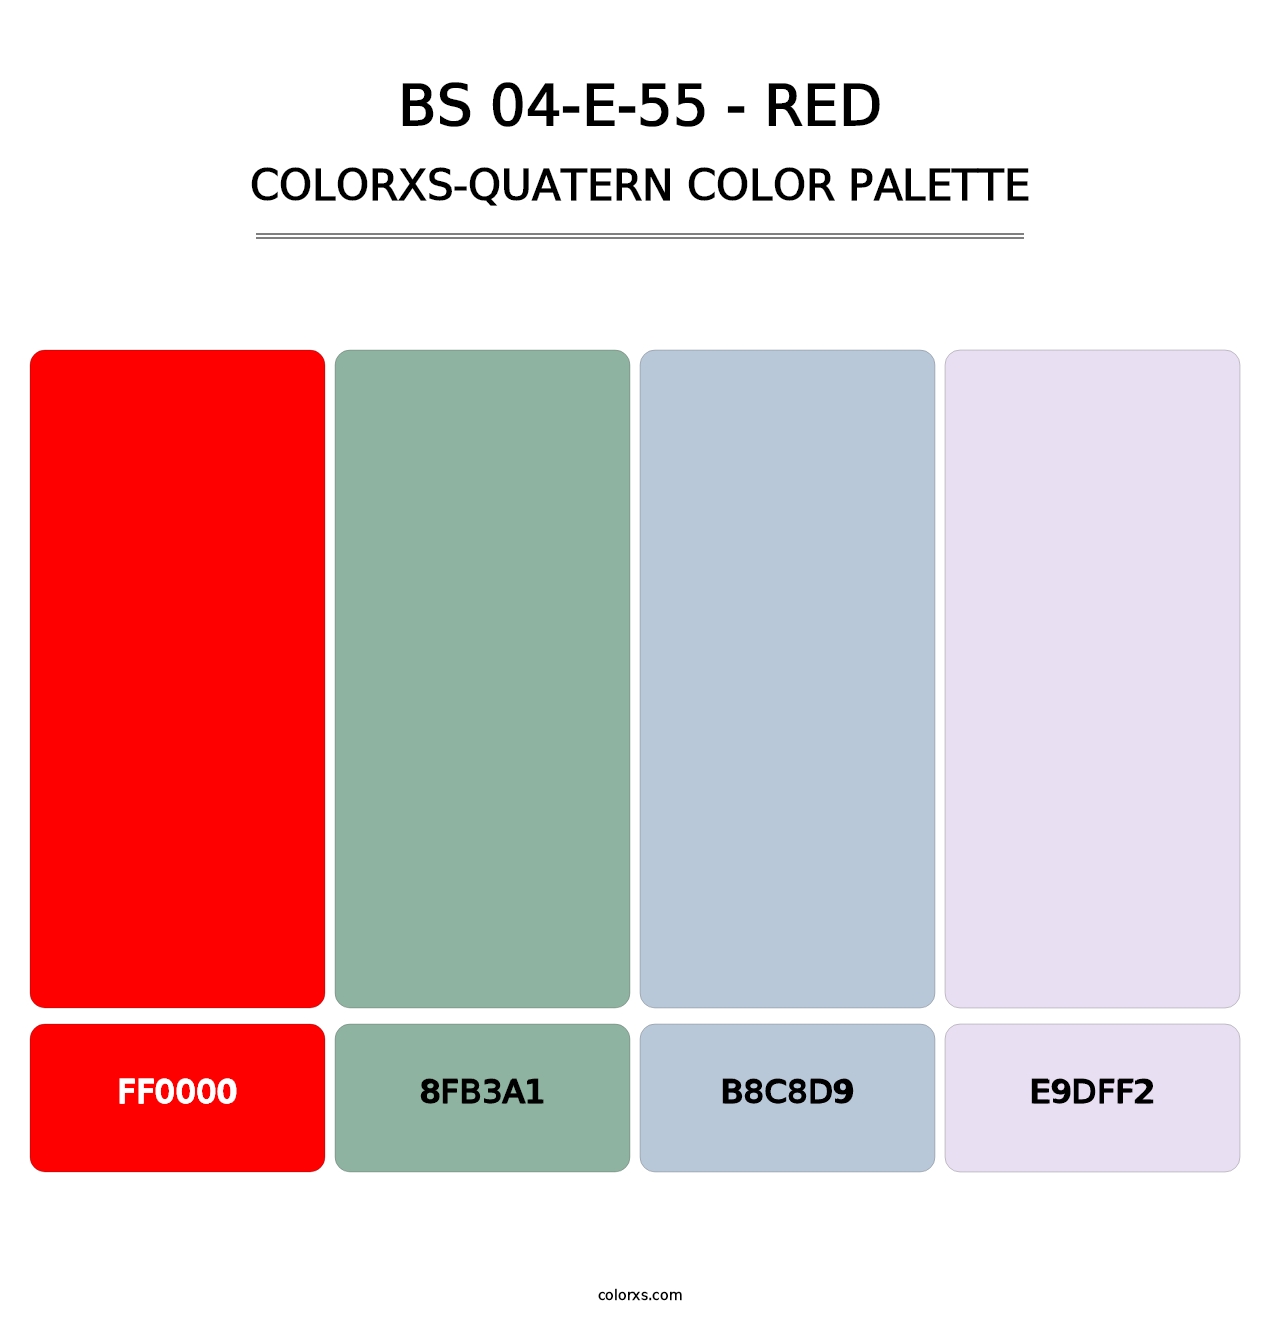 BS 04-E-55 - Red - Colorxs Quatern Palette